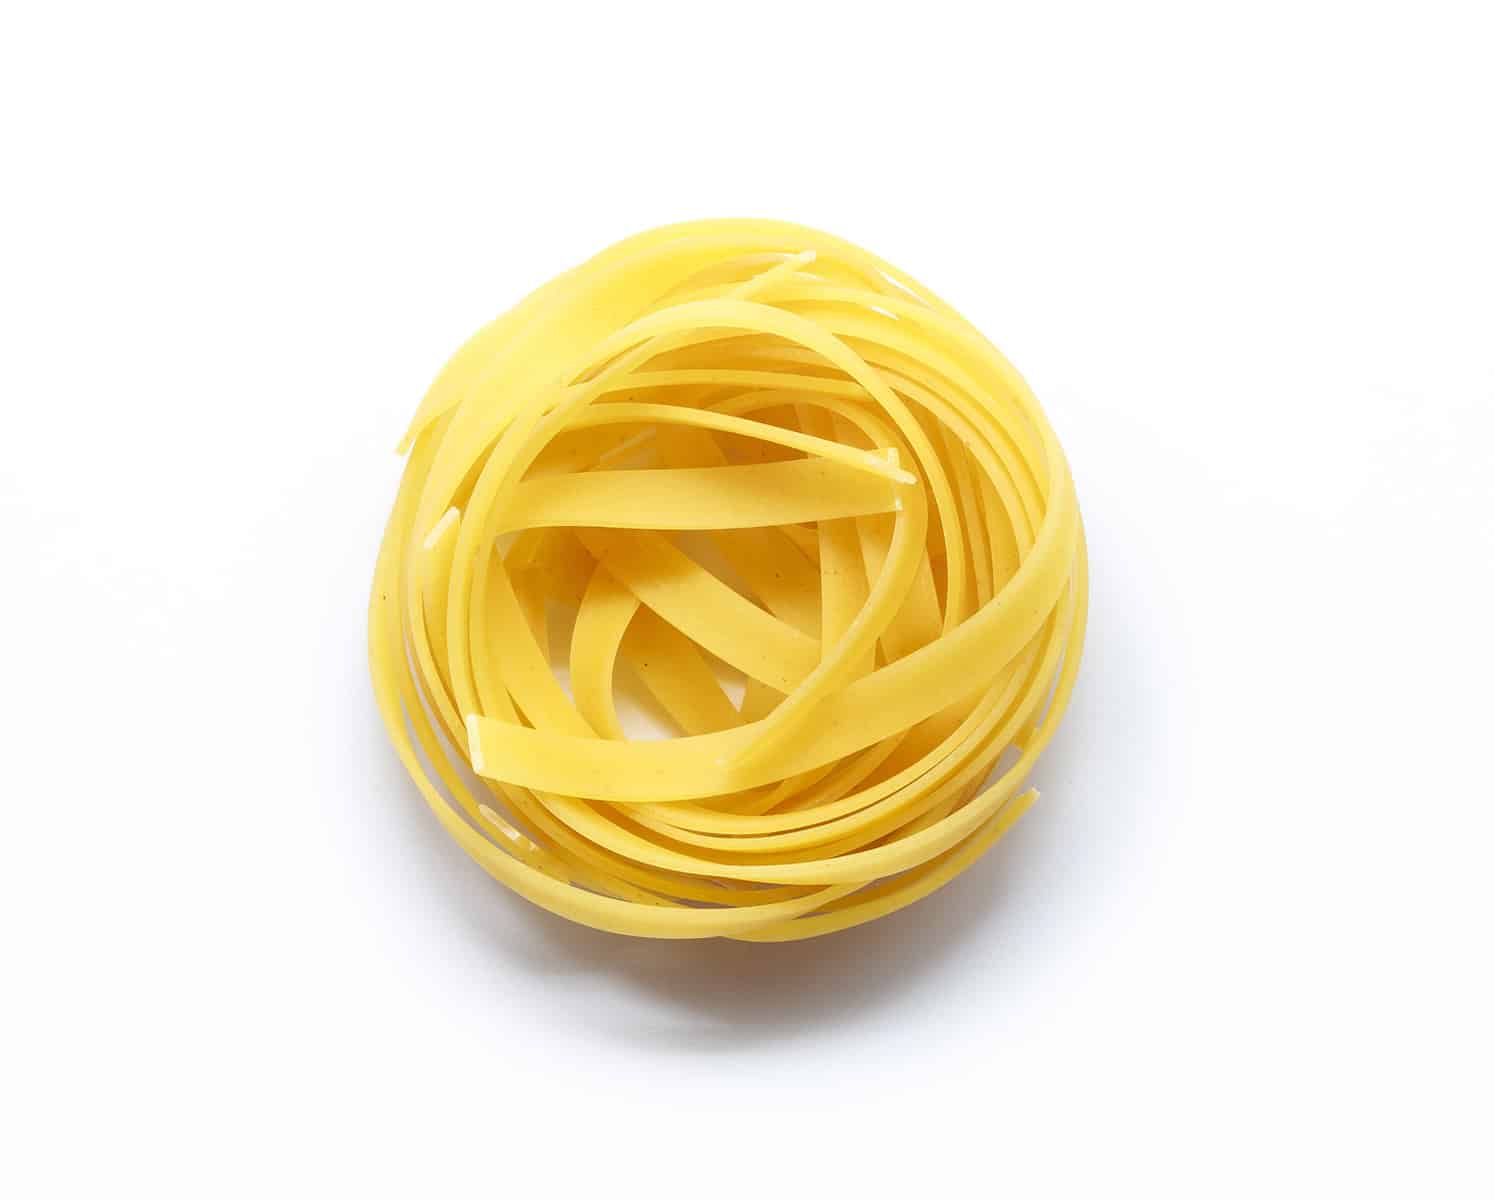 Fettuccine italian pasta isolated on white background